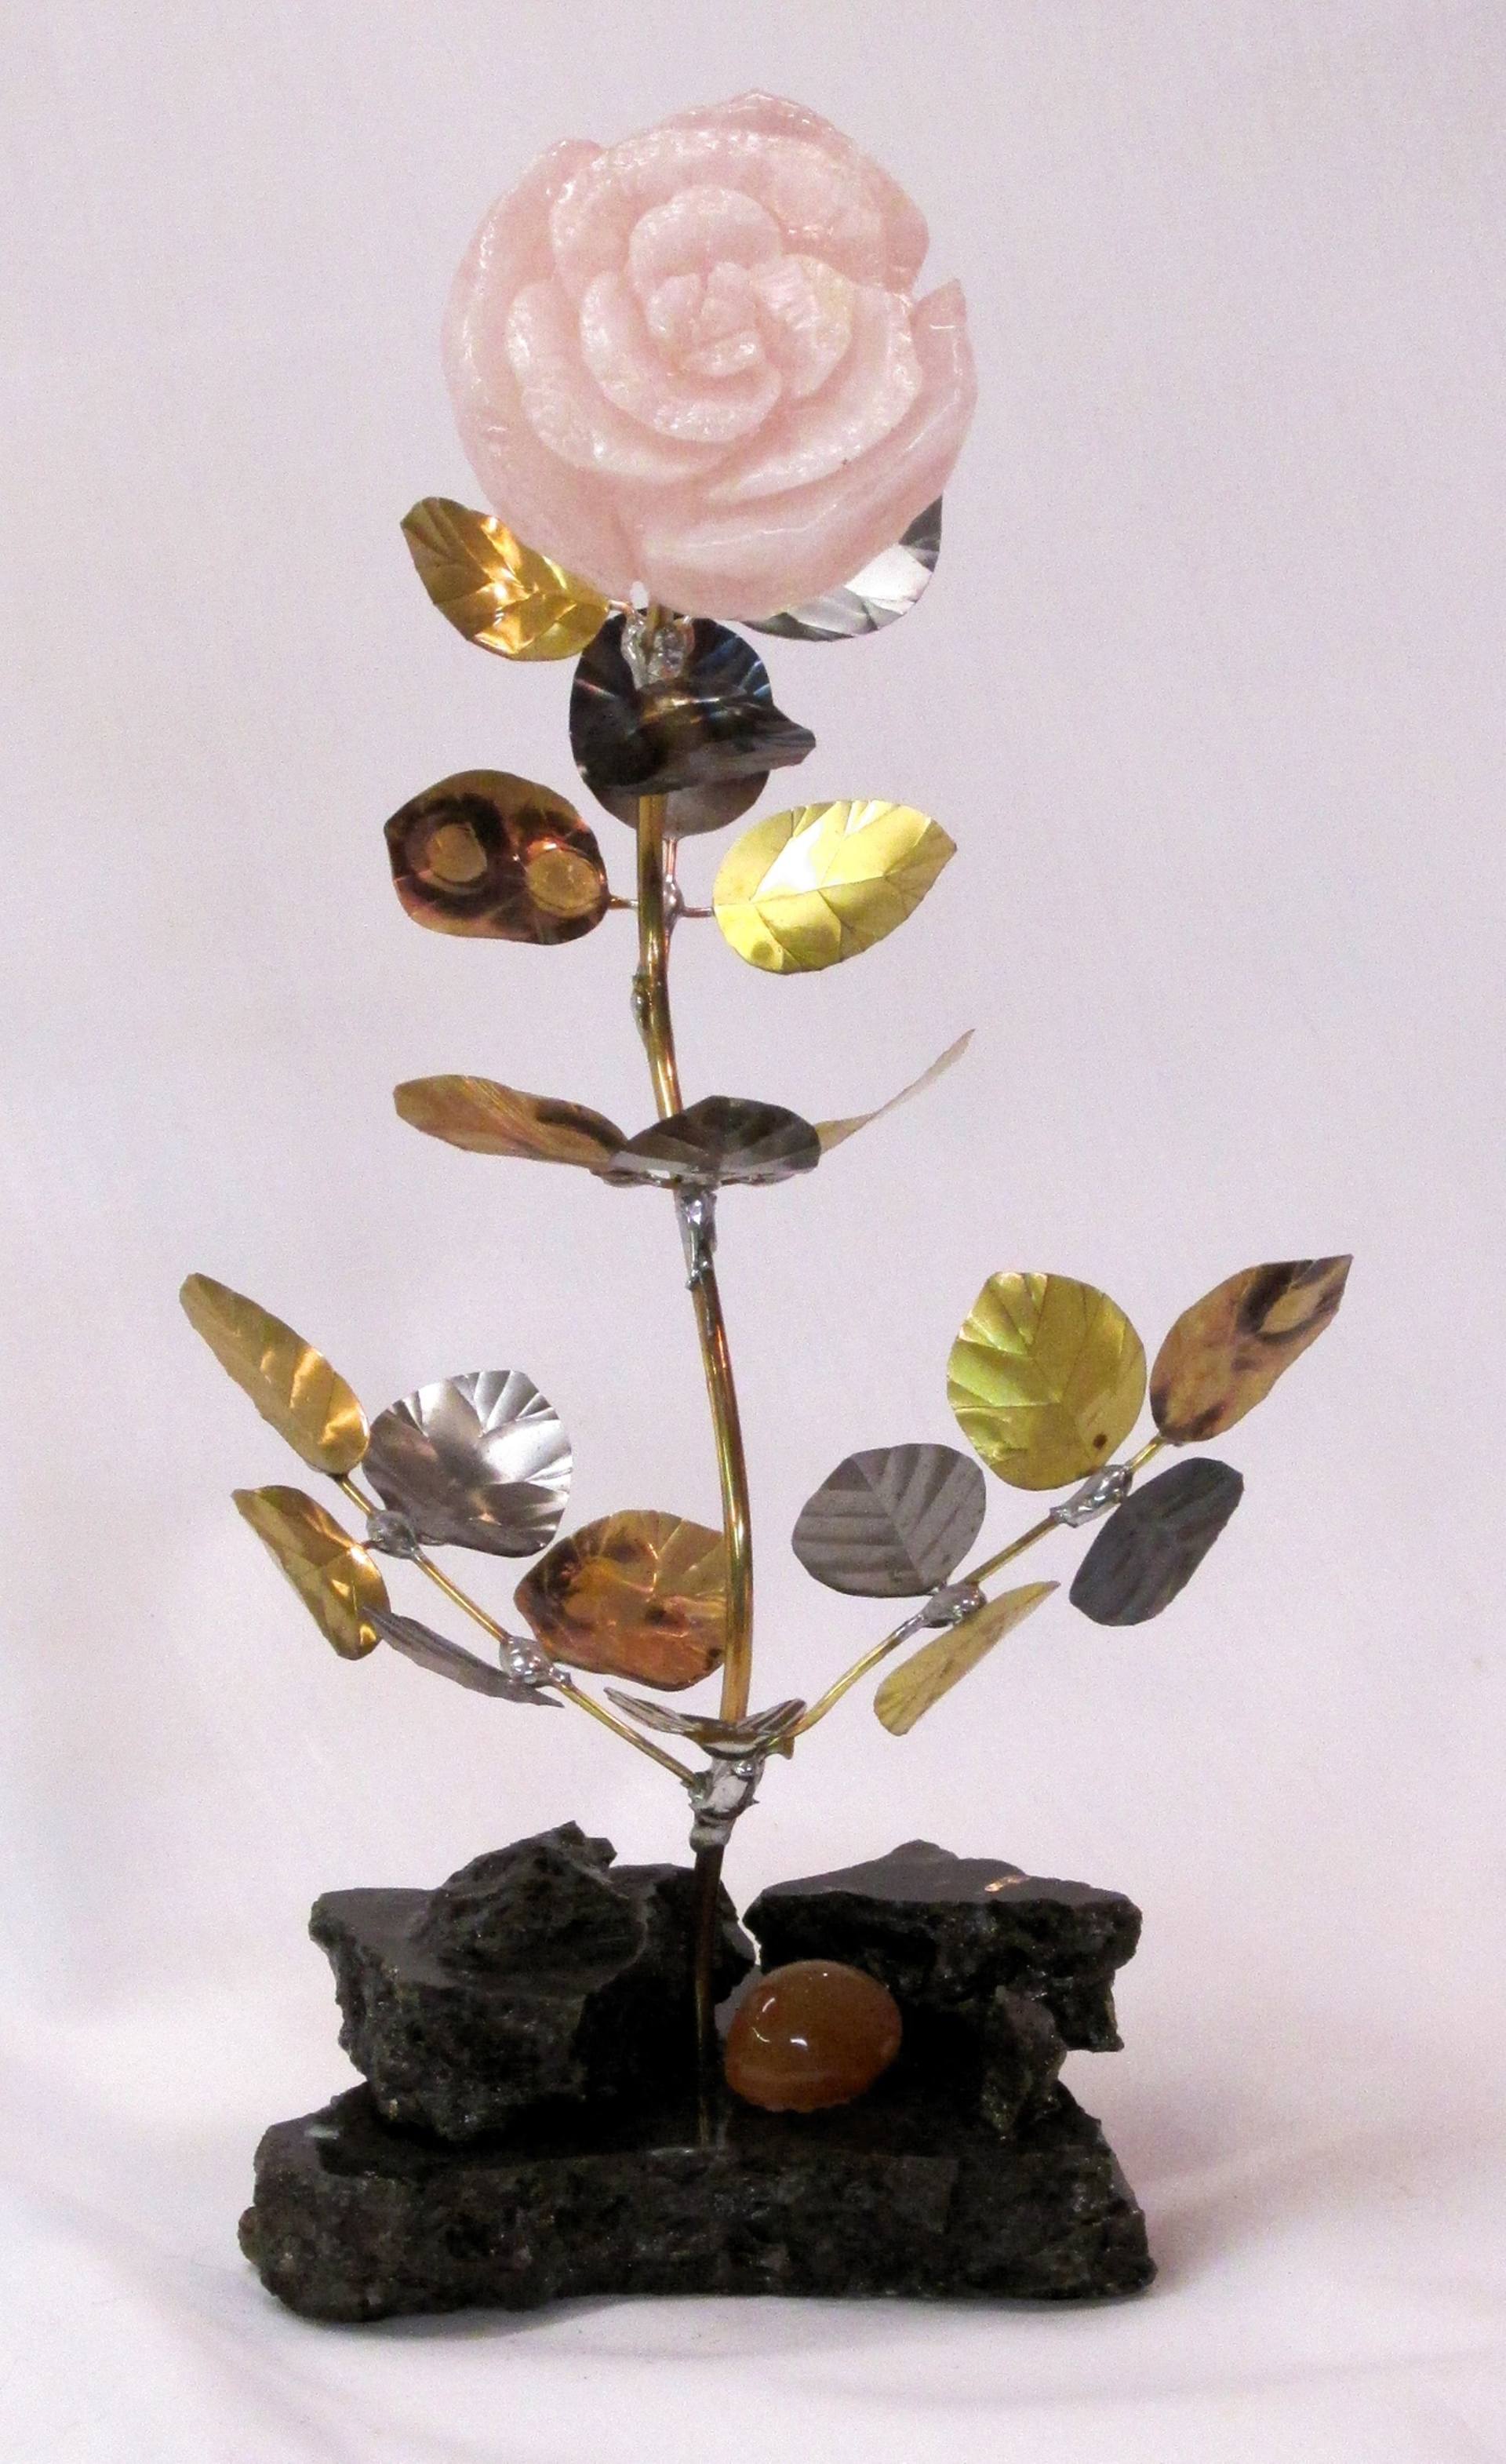 Saatchi Art: Rose Quartz Stone Flower Sculpture No. 1-1 Sculpture by ...